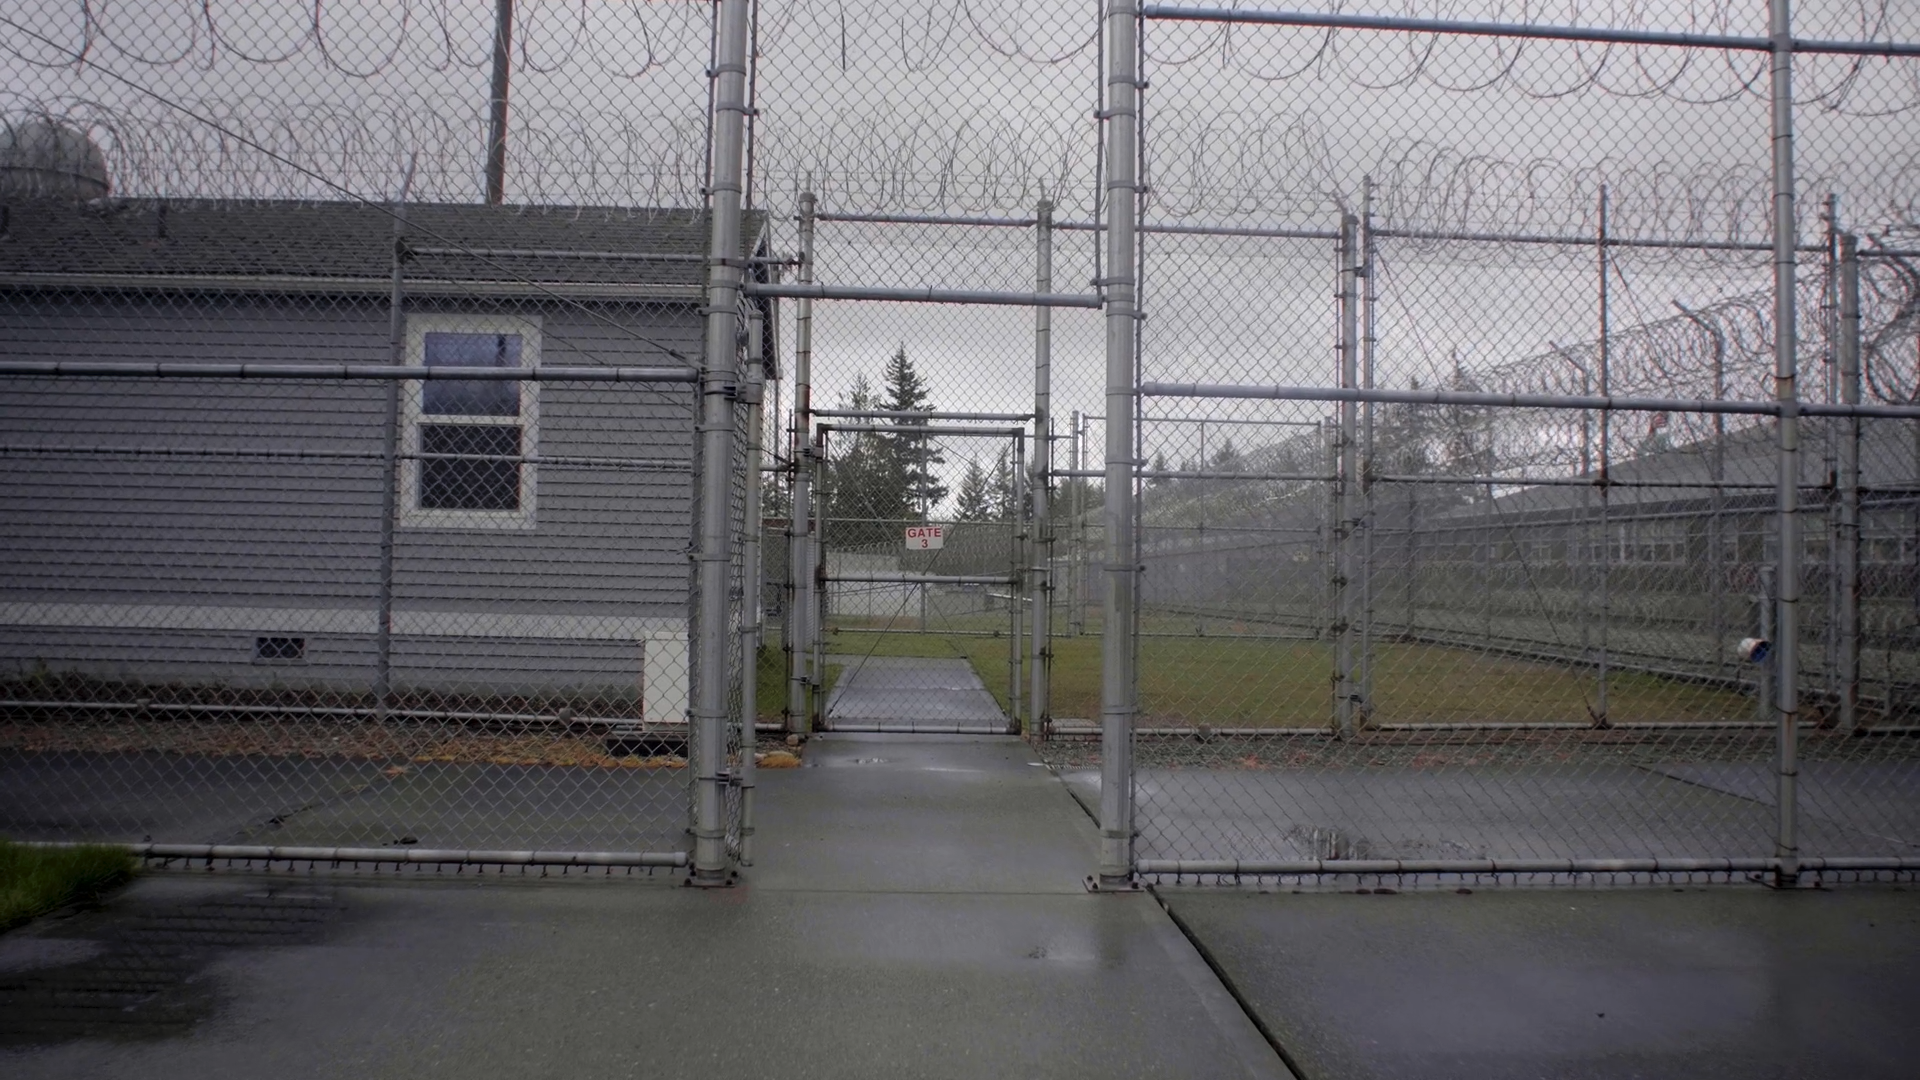 DOC-SinceIveBeenDown-vista-prison fence2.png